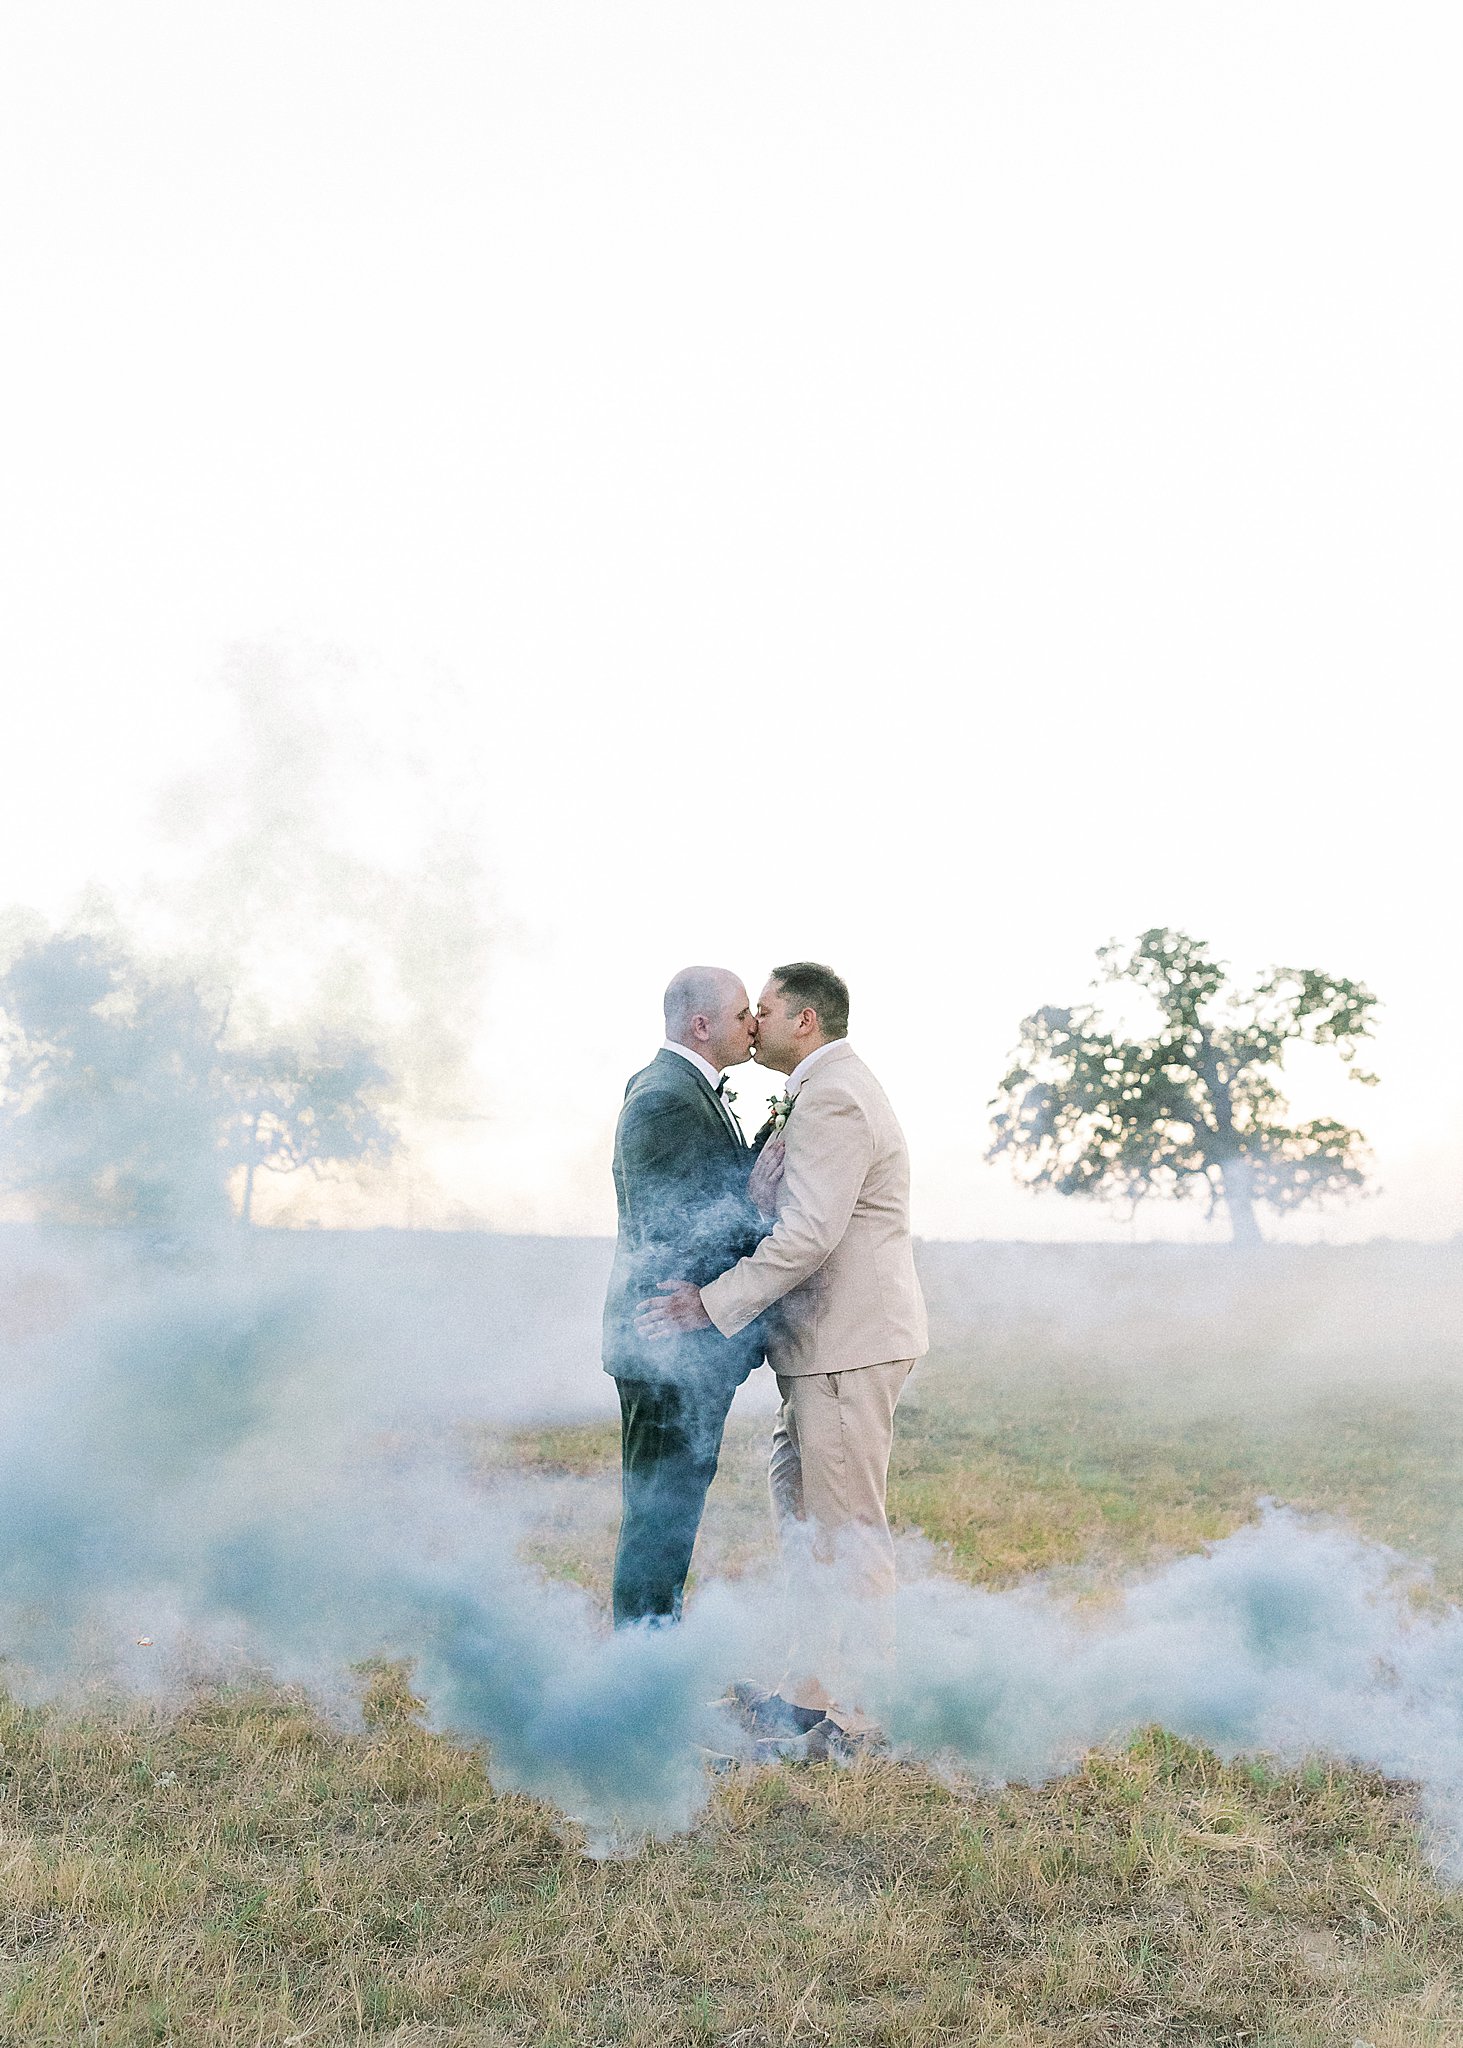 Couples Portrait with Smoke Bomb, Anna Kay Photography, Austin Wedding Photographer